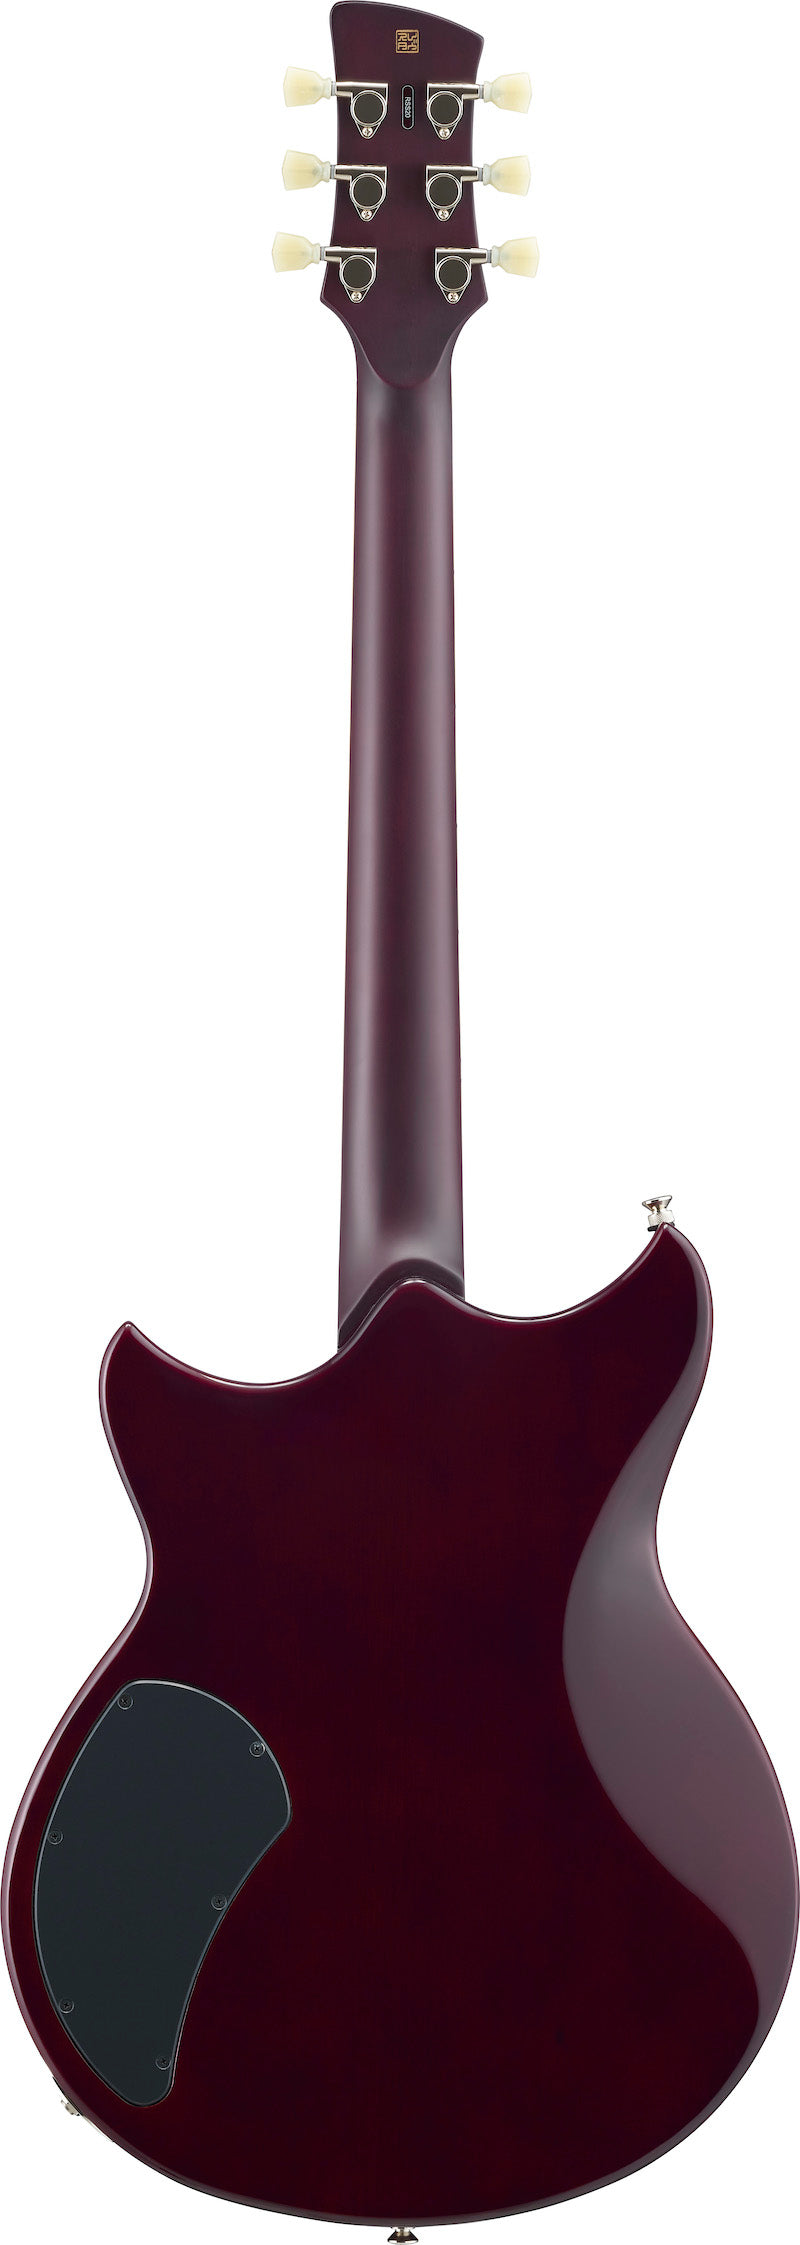 Yamaha Revstar RSS20 HML Electric Guitar - Hot Merlot